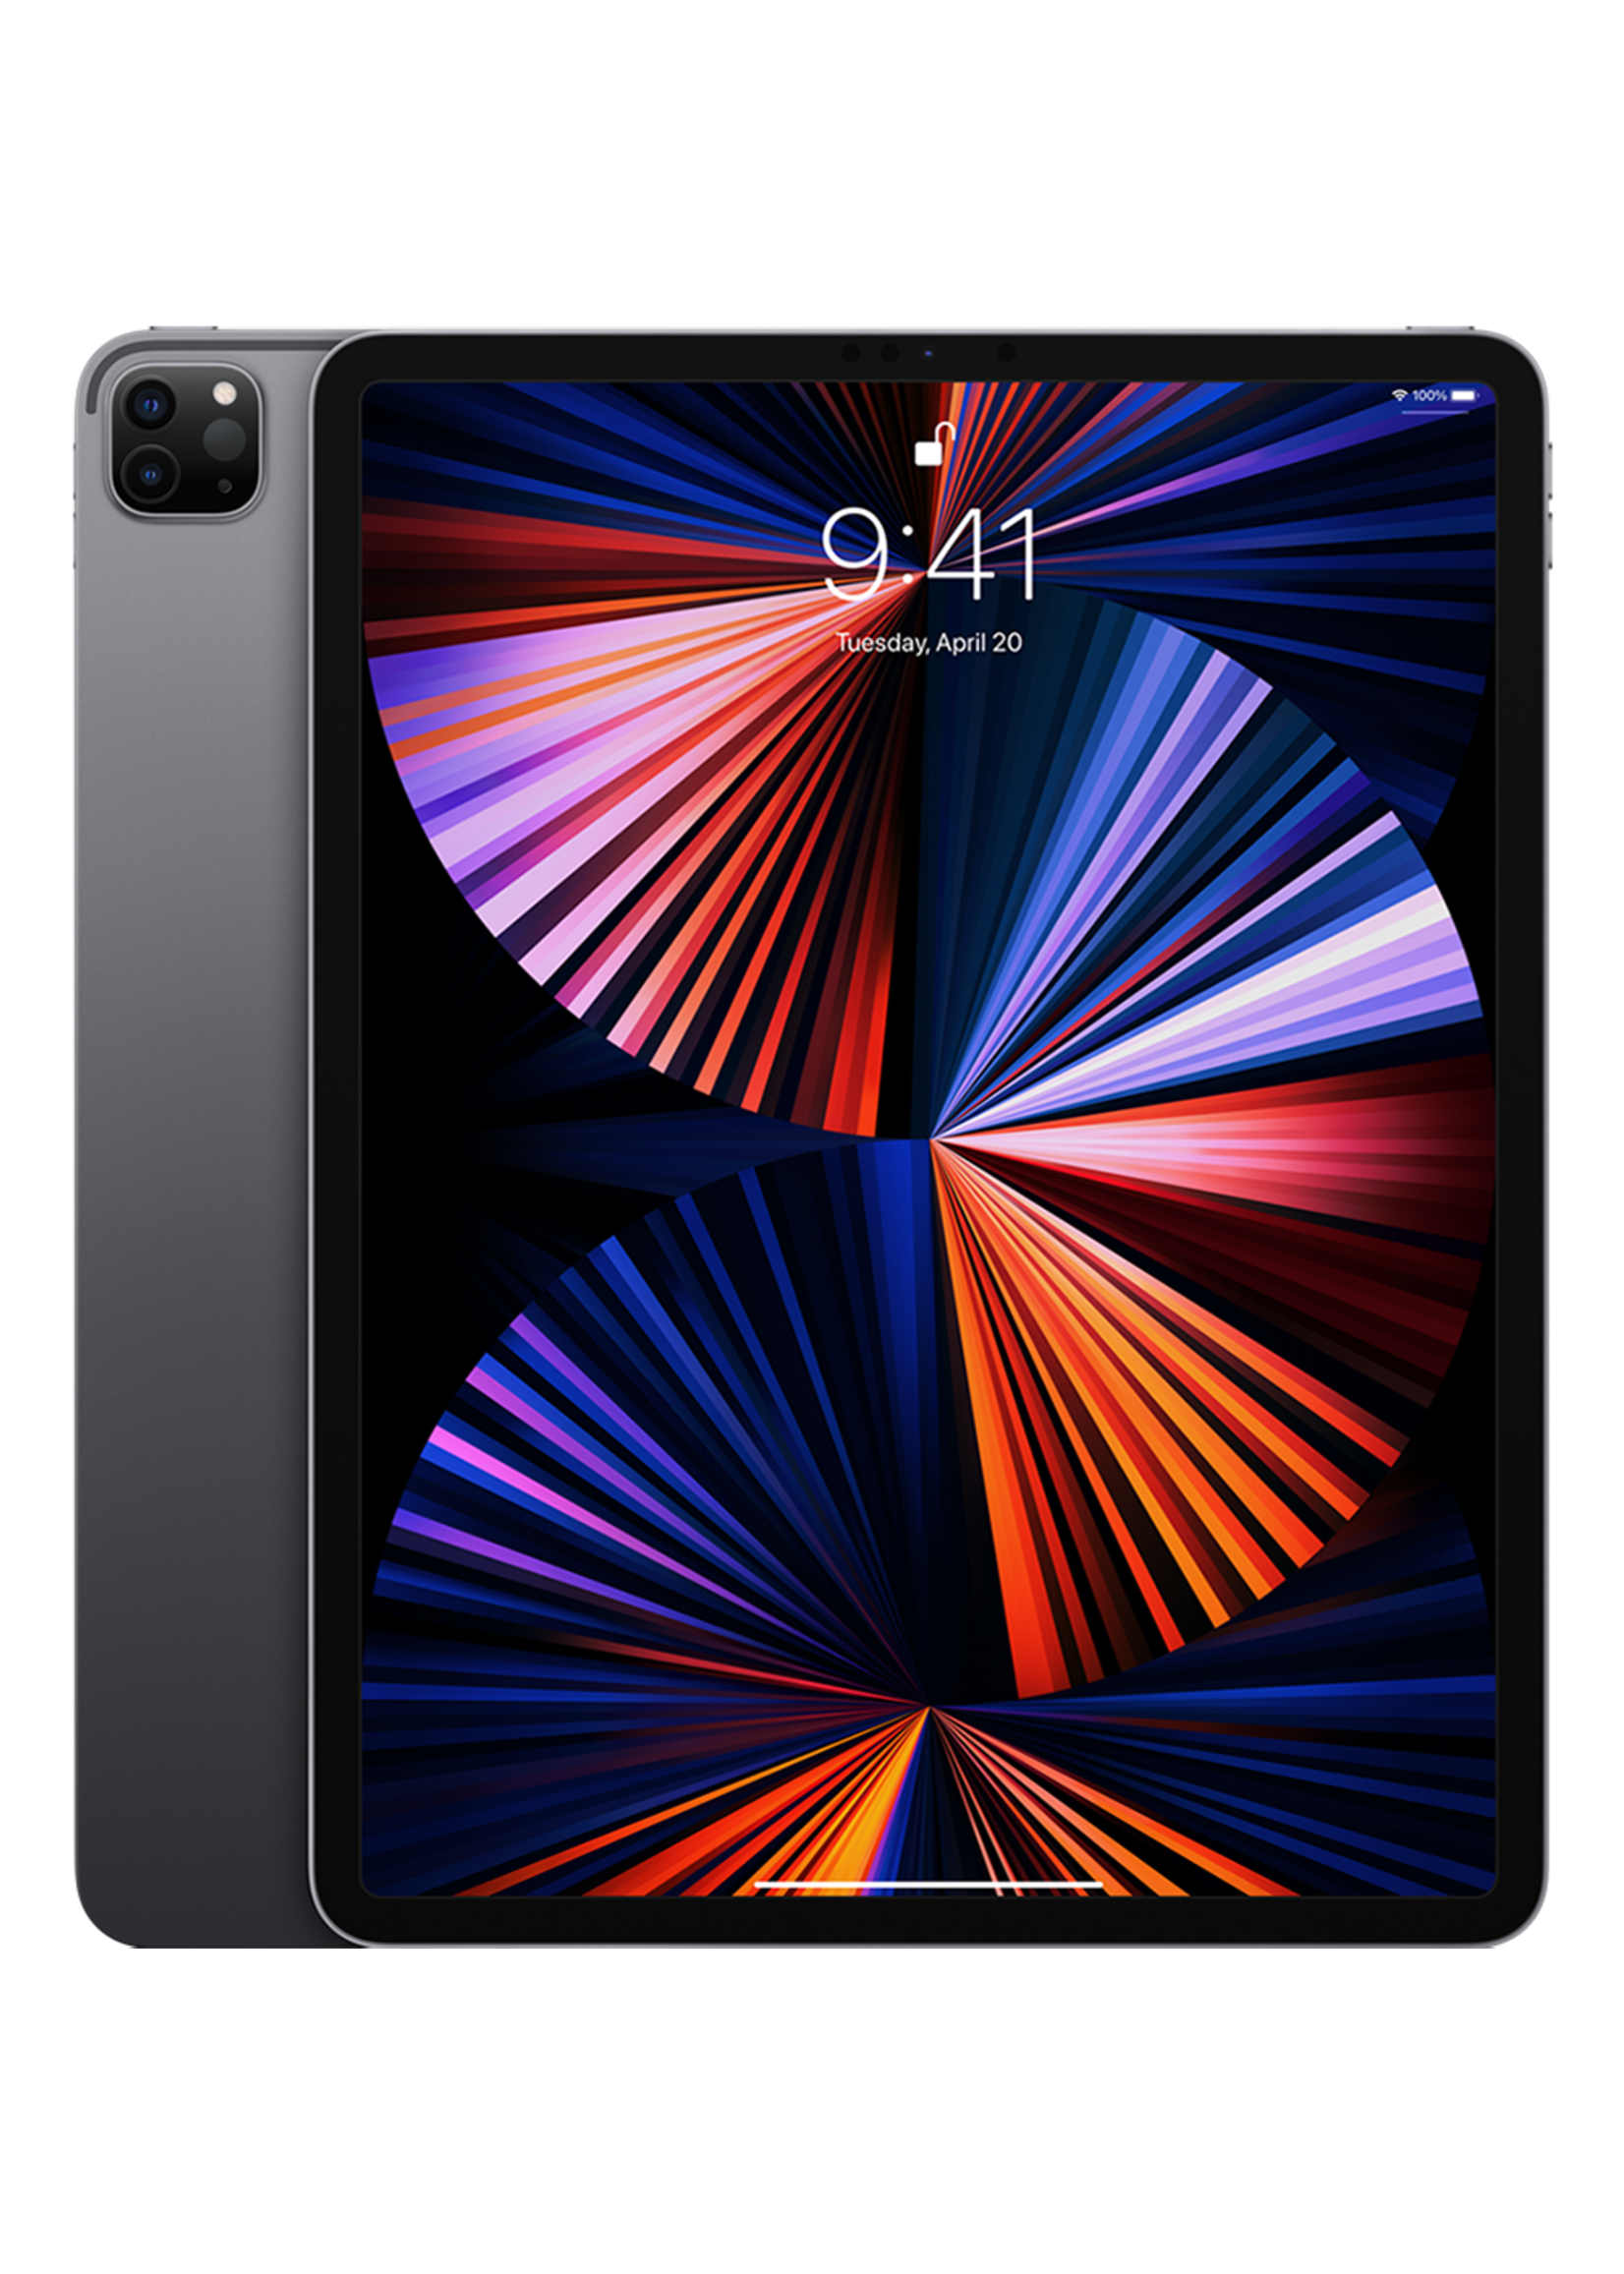 iPad Pro 12.9-inch(CLEARANCE)